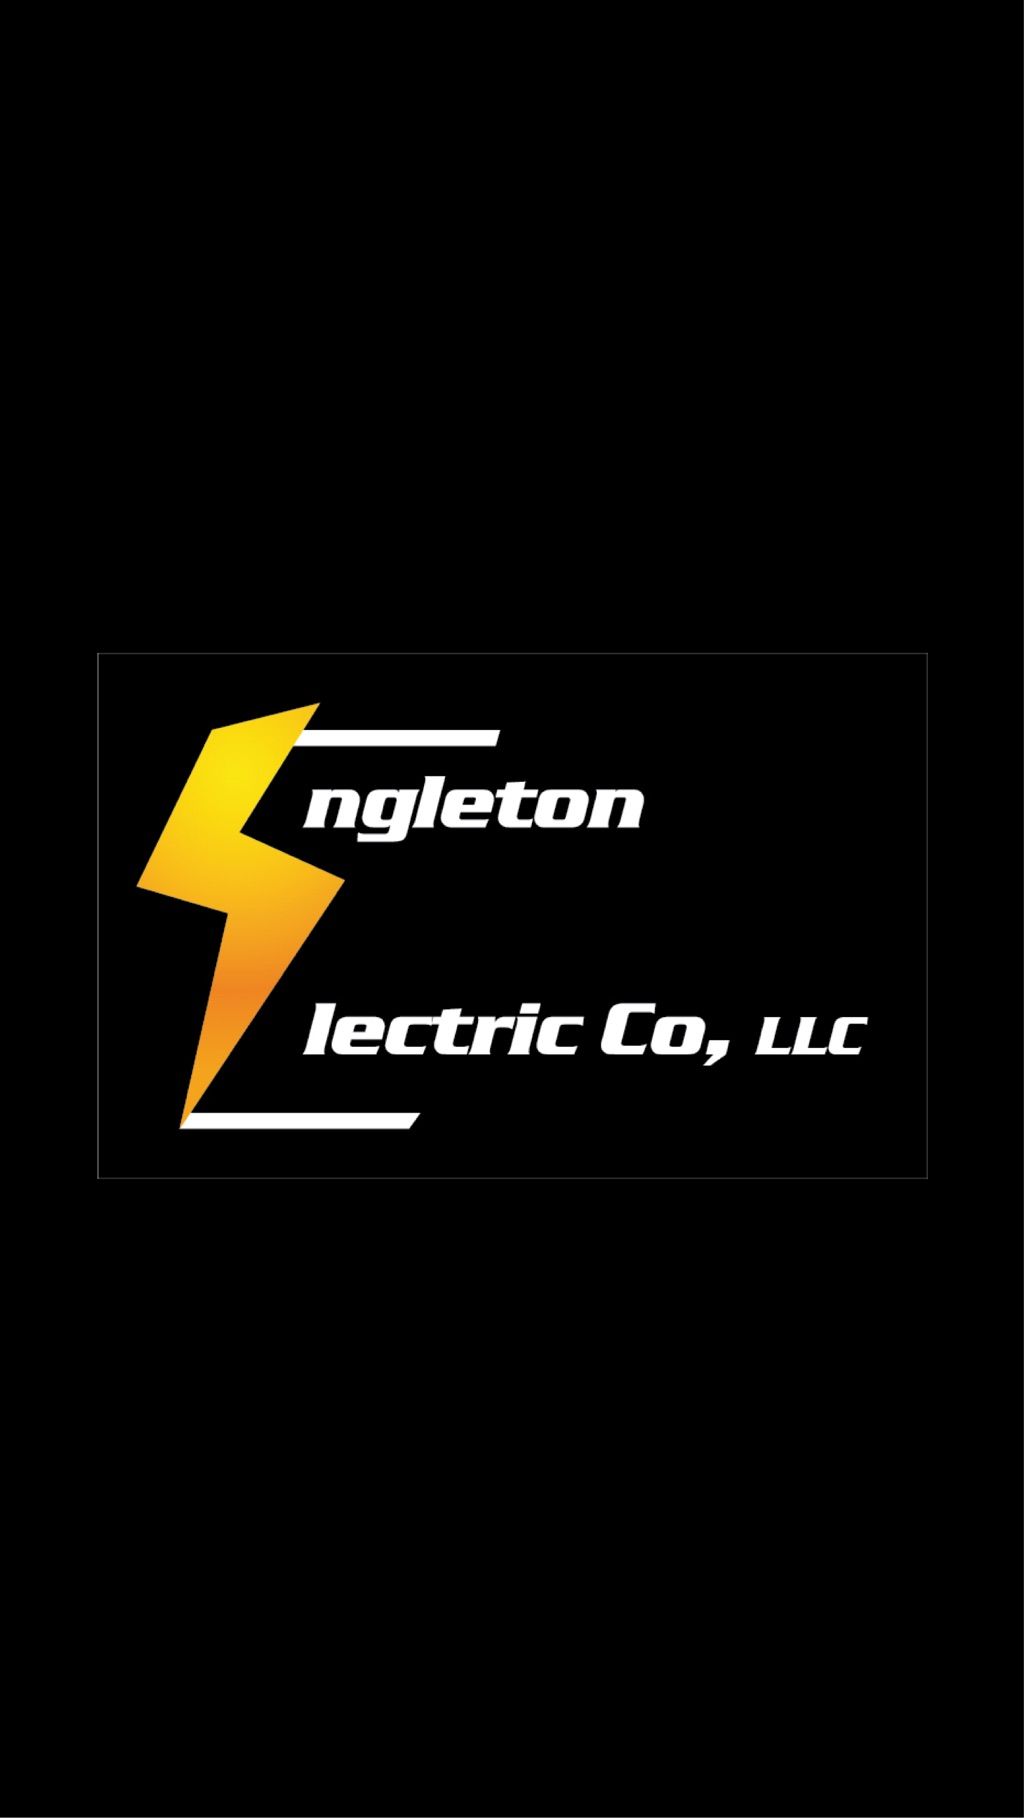 Engleton Electric Co, LLC